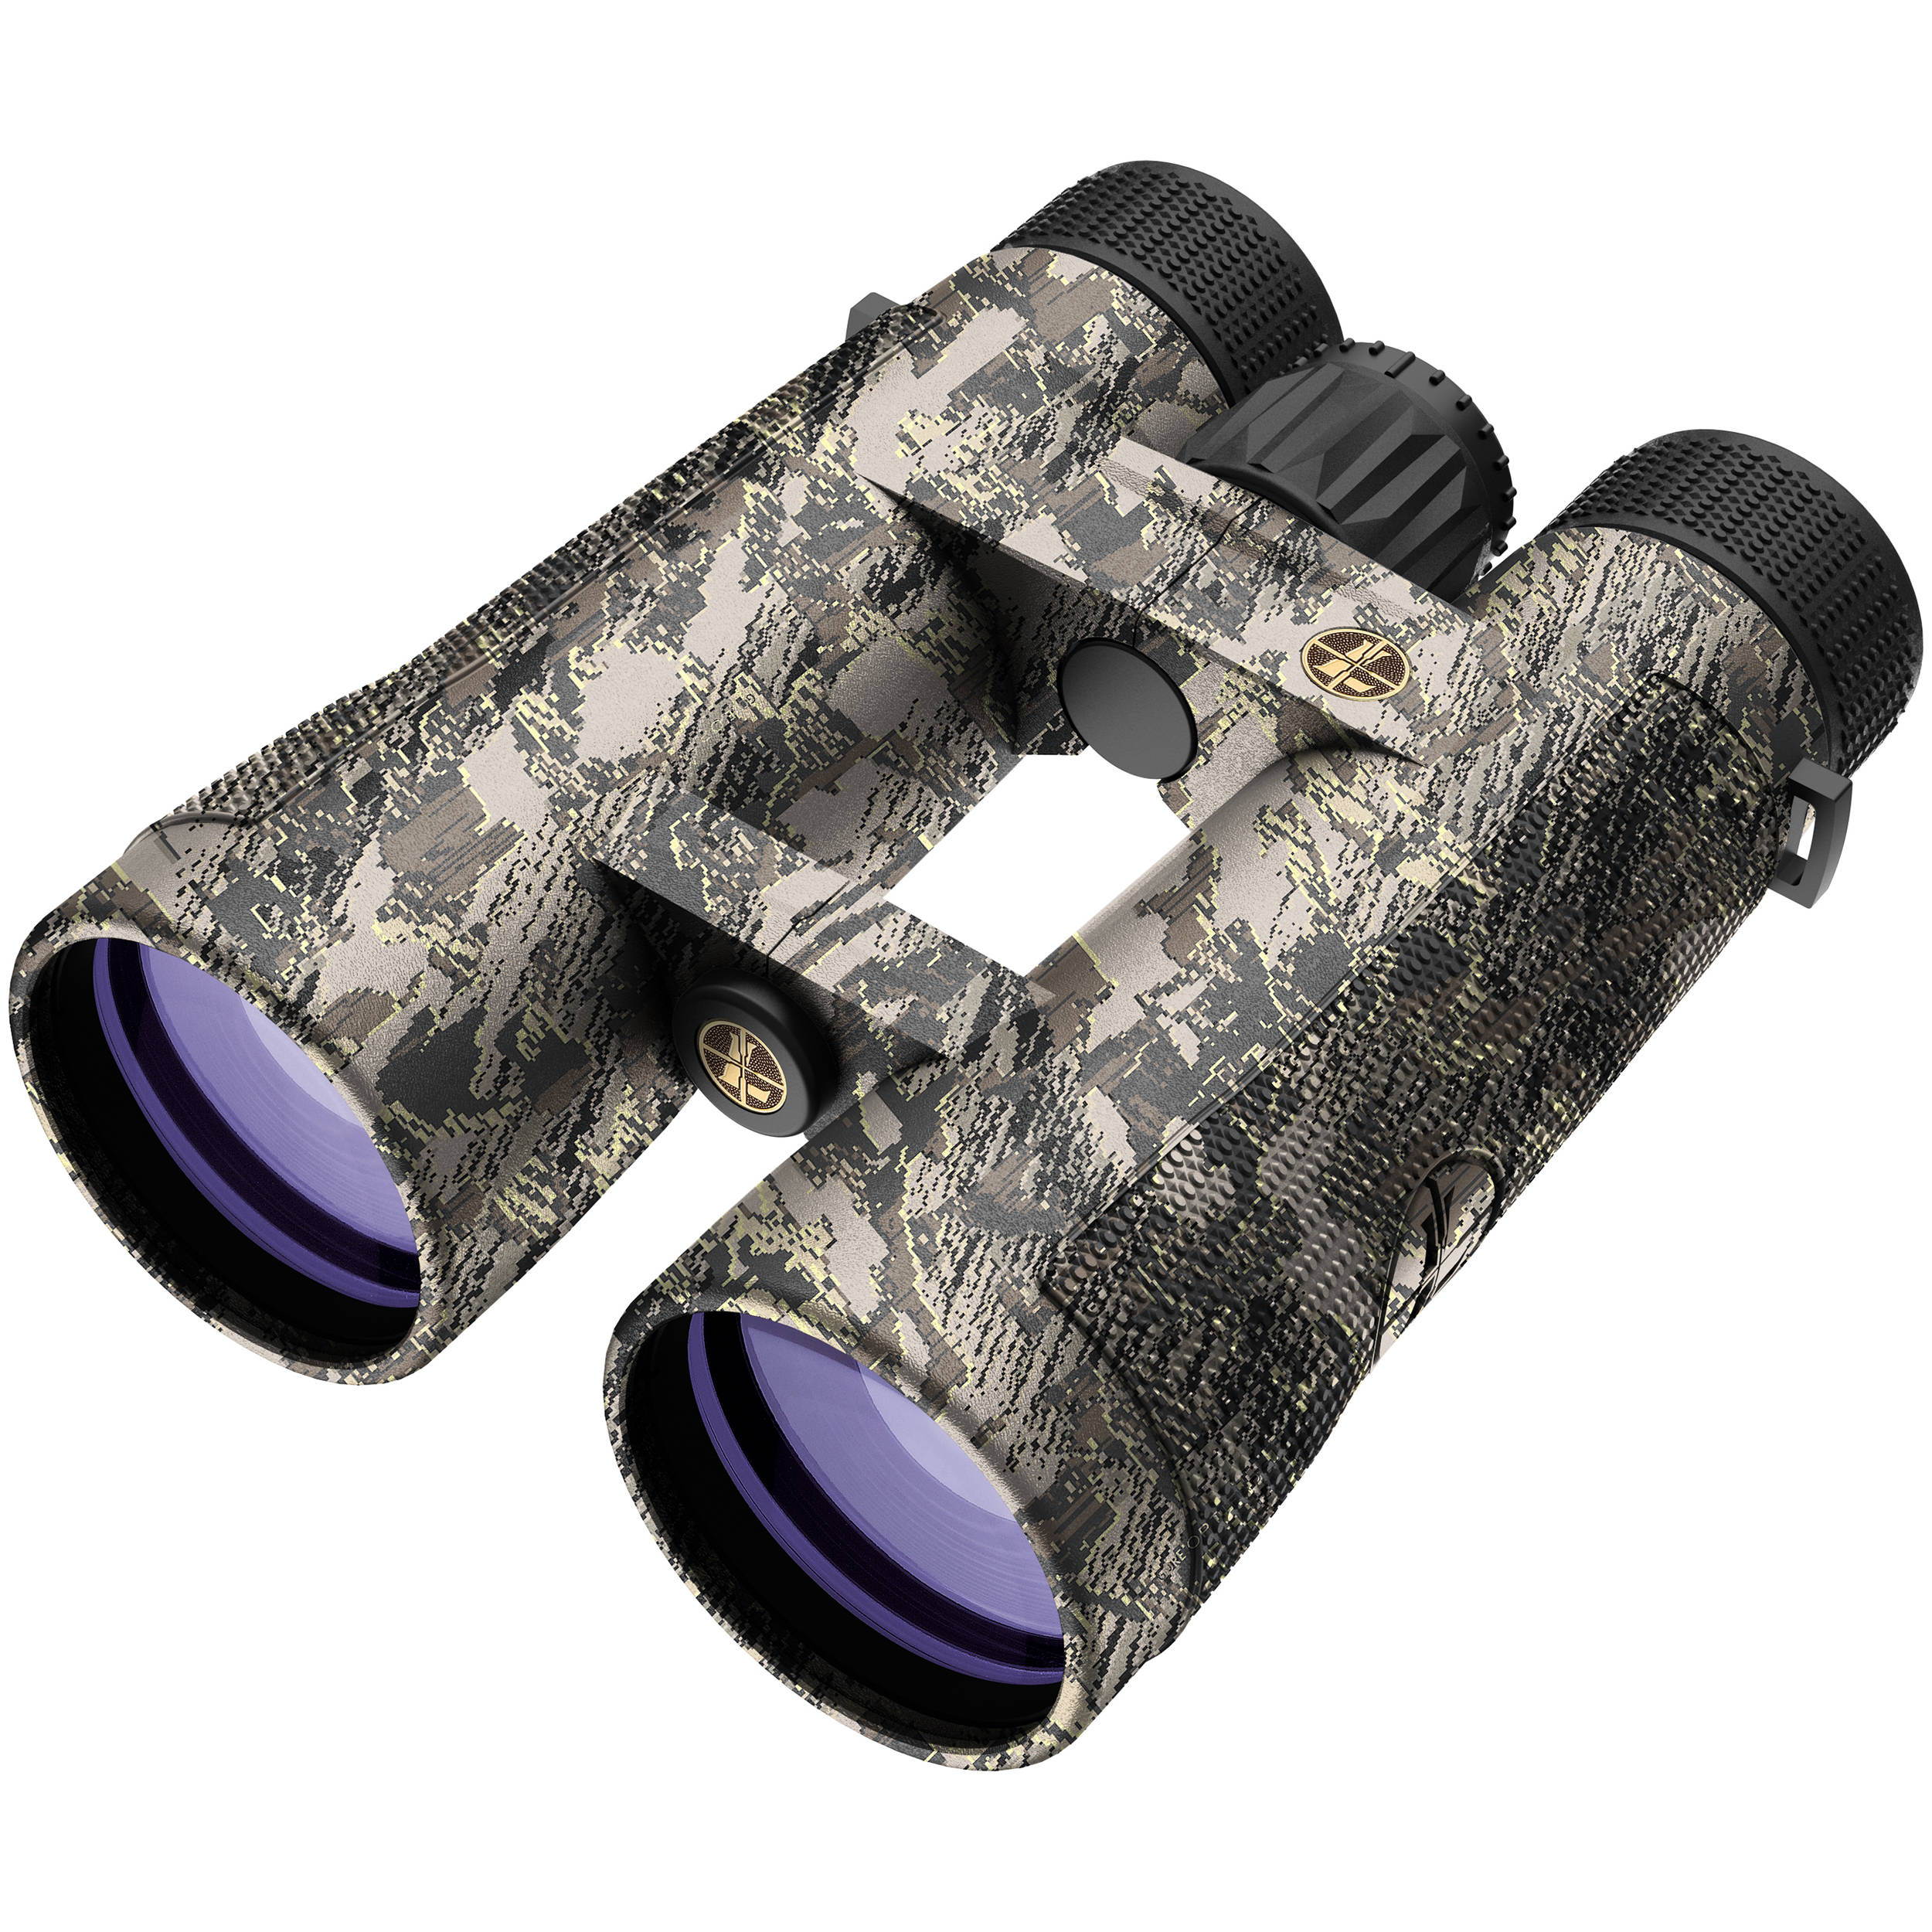 Leupold Binocular Bx4 Progde 12X50 Soc Pro Guide Hd|Sitka Open Cntry Lp172672